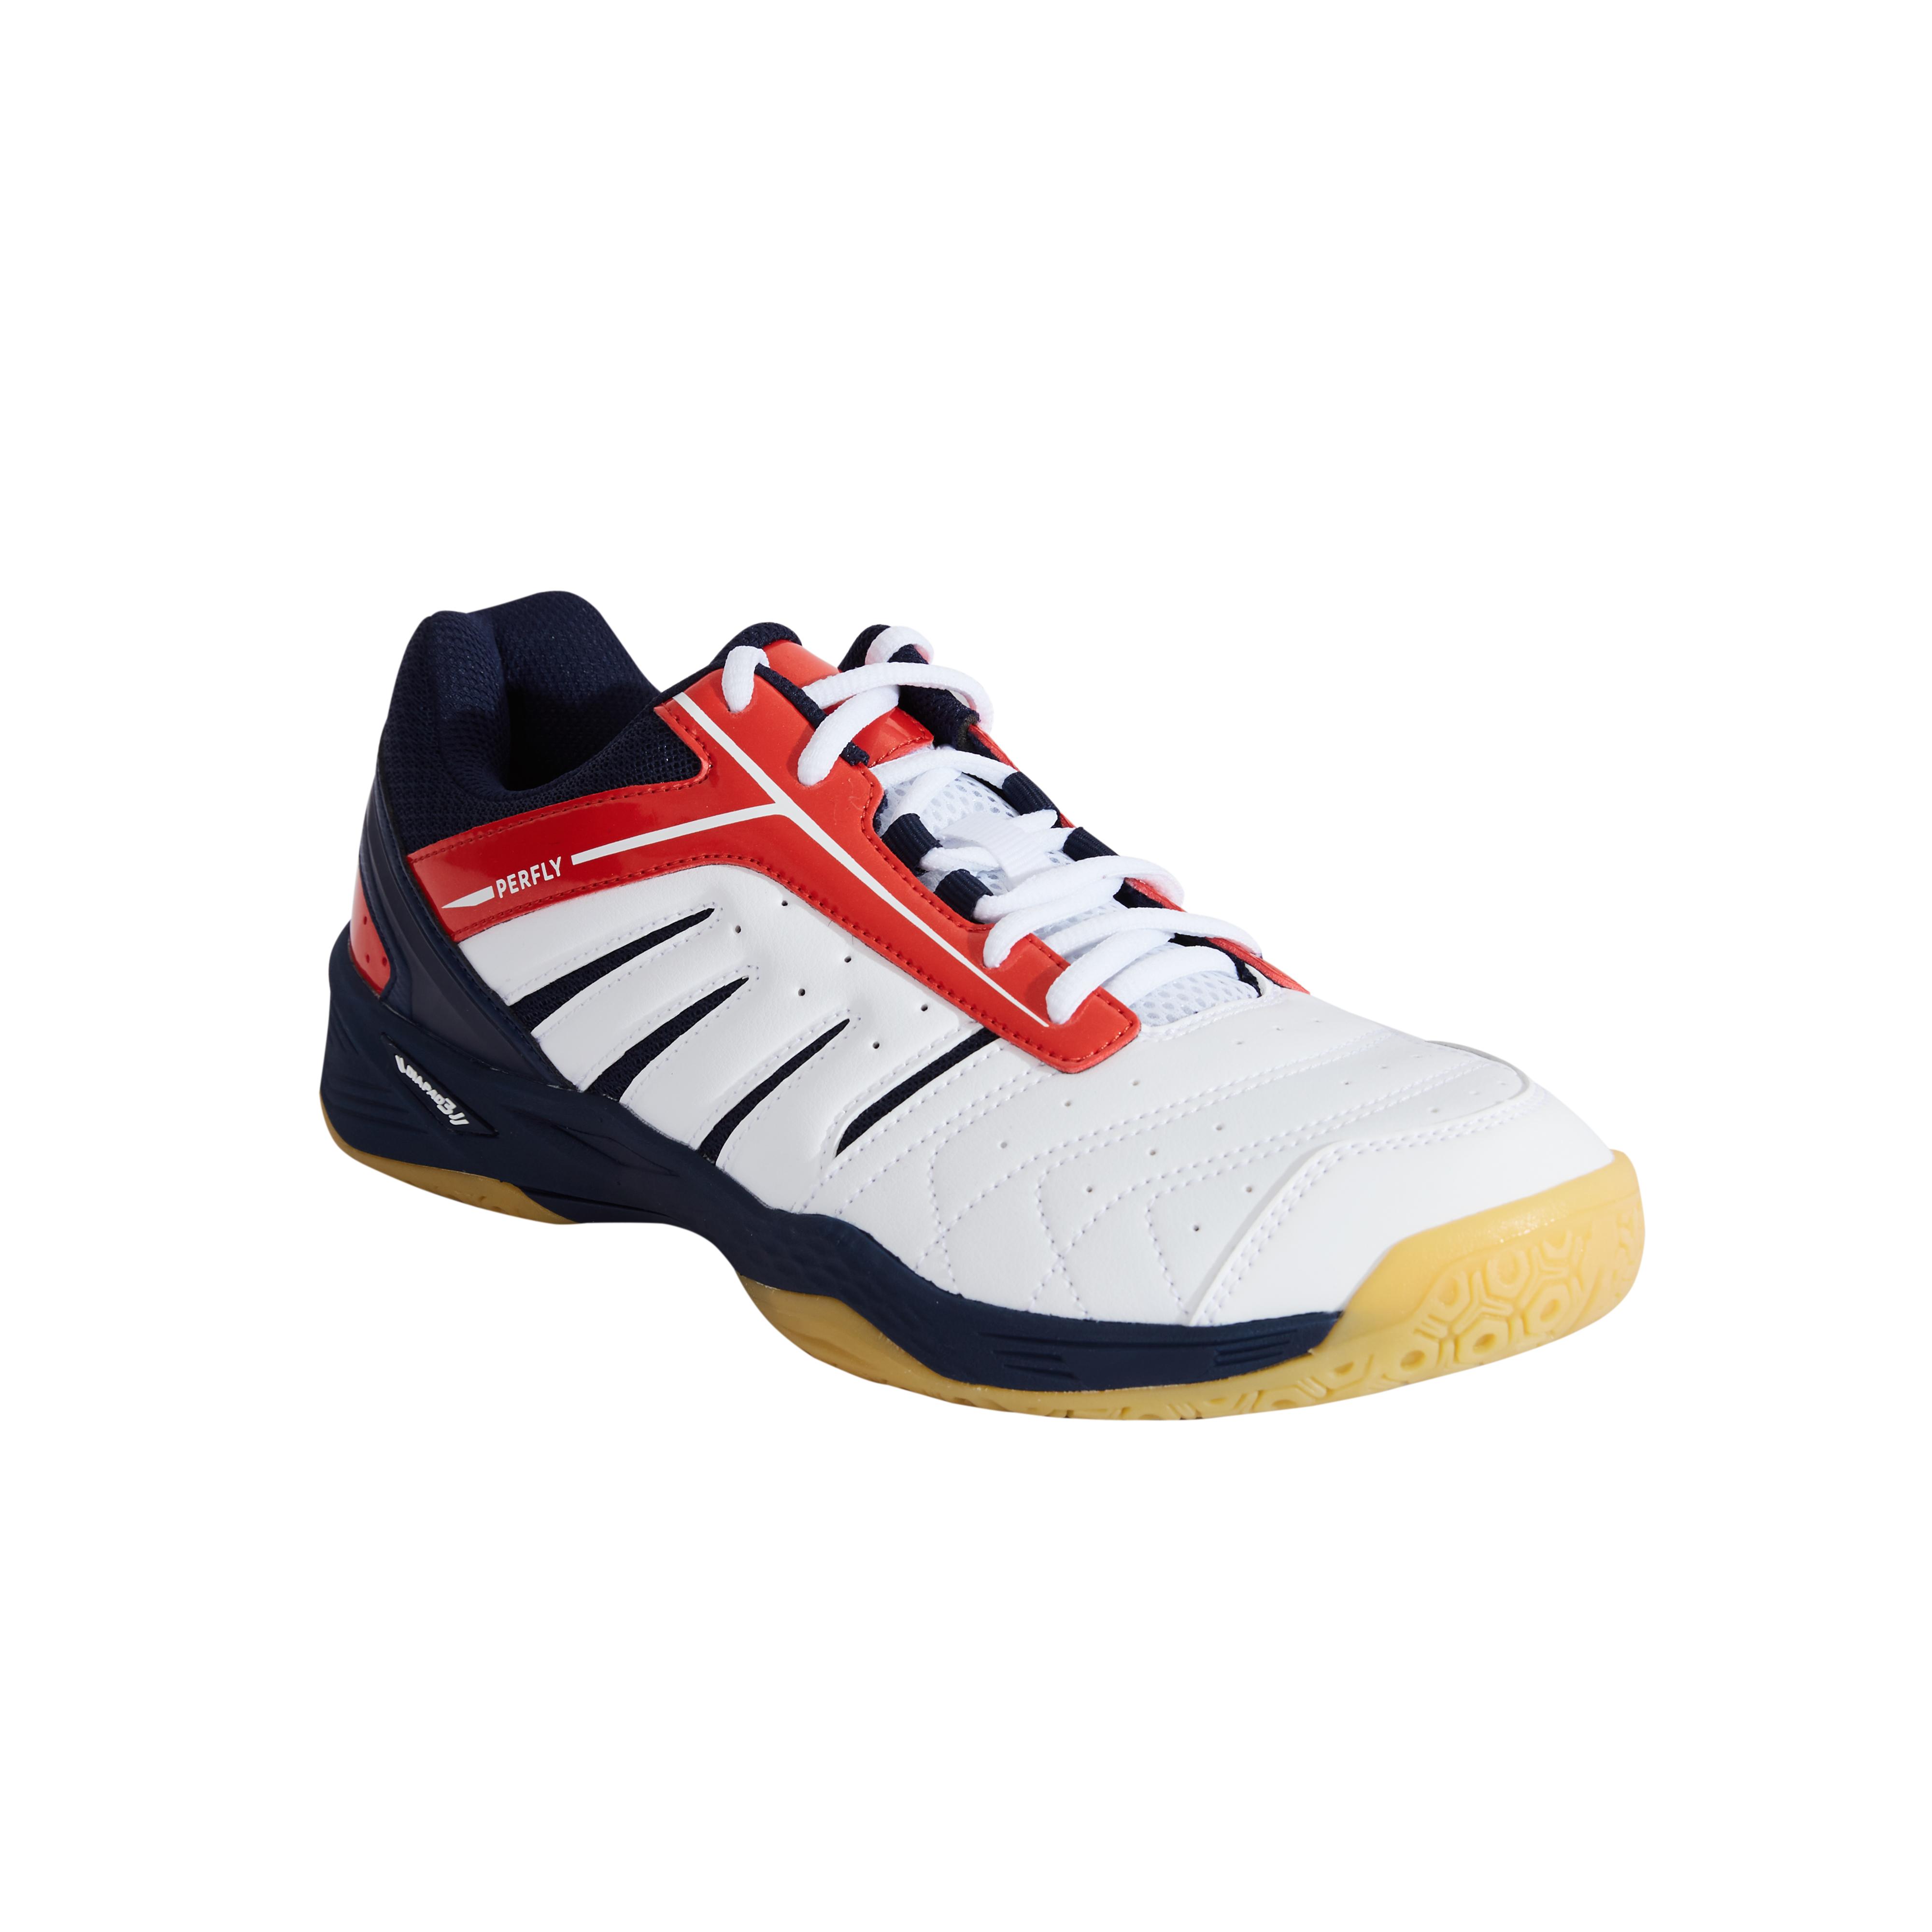 decathlon shoes for badminton